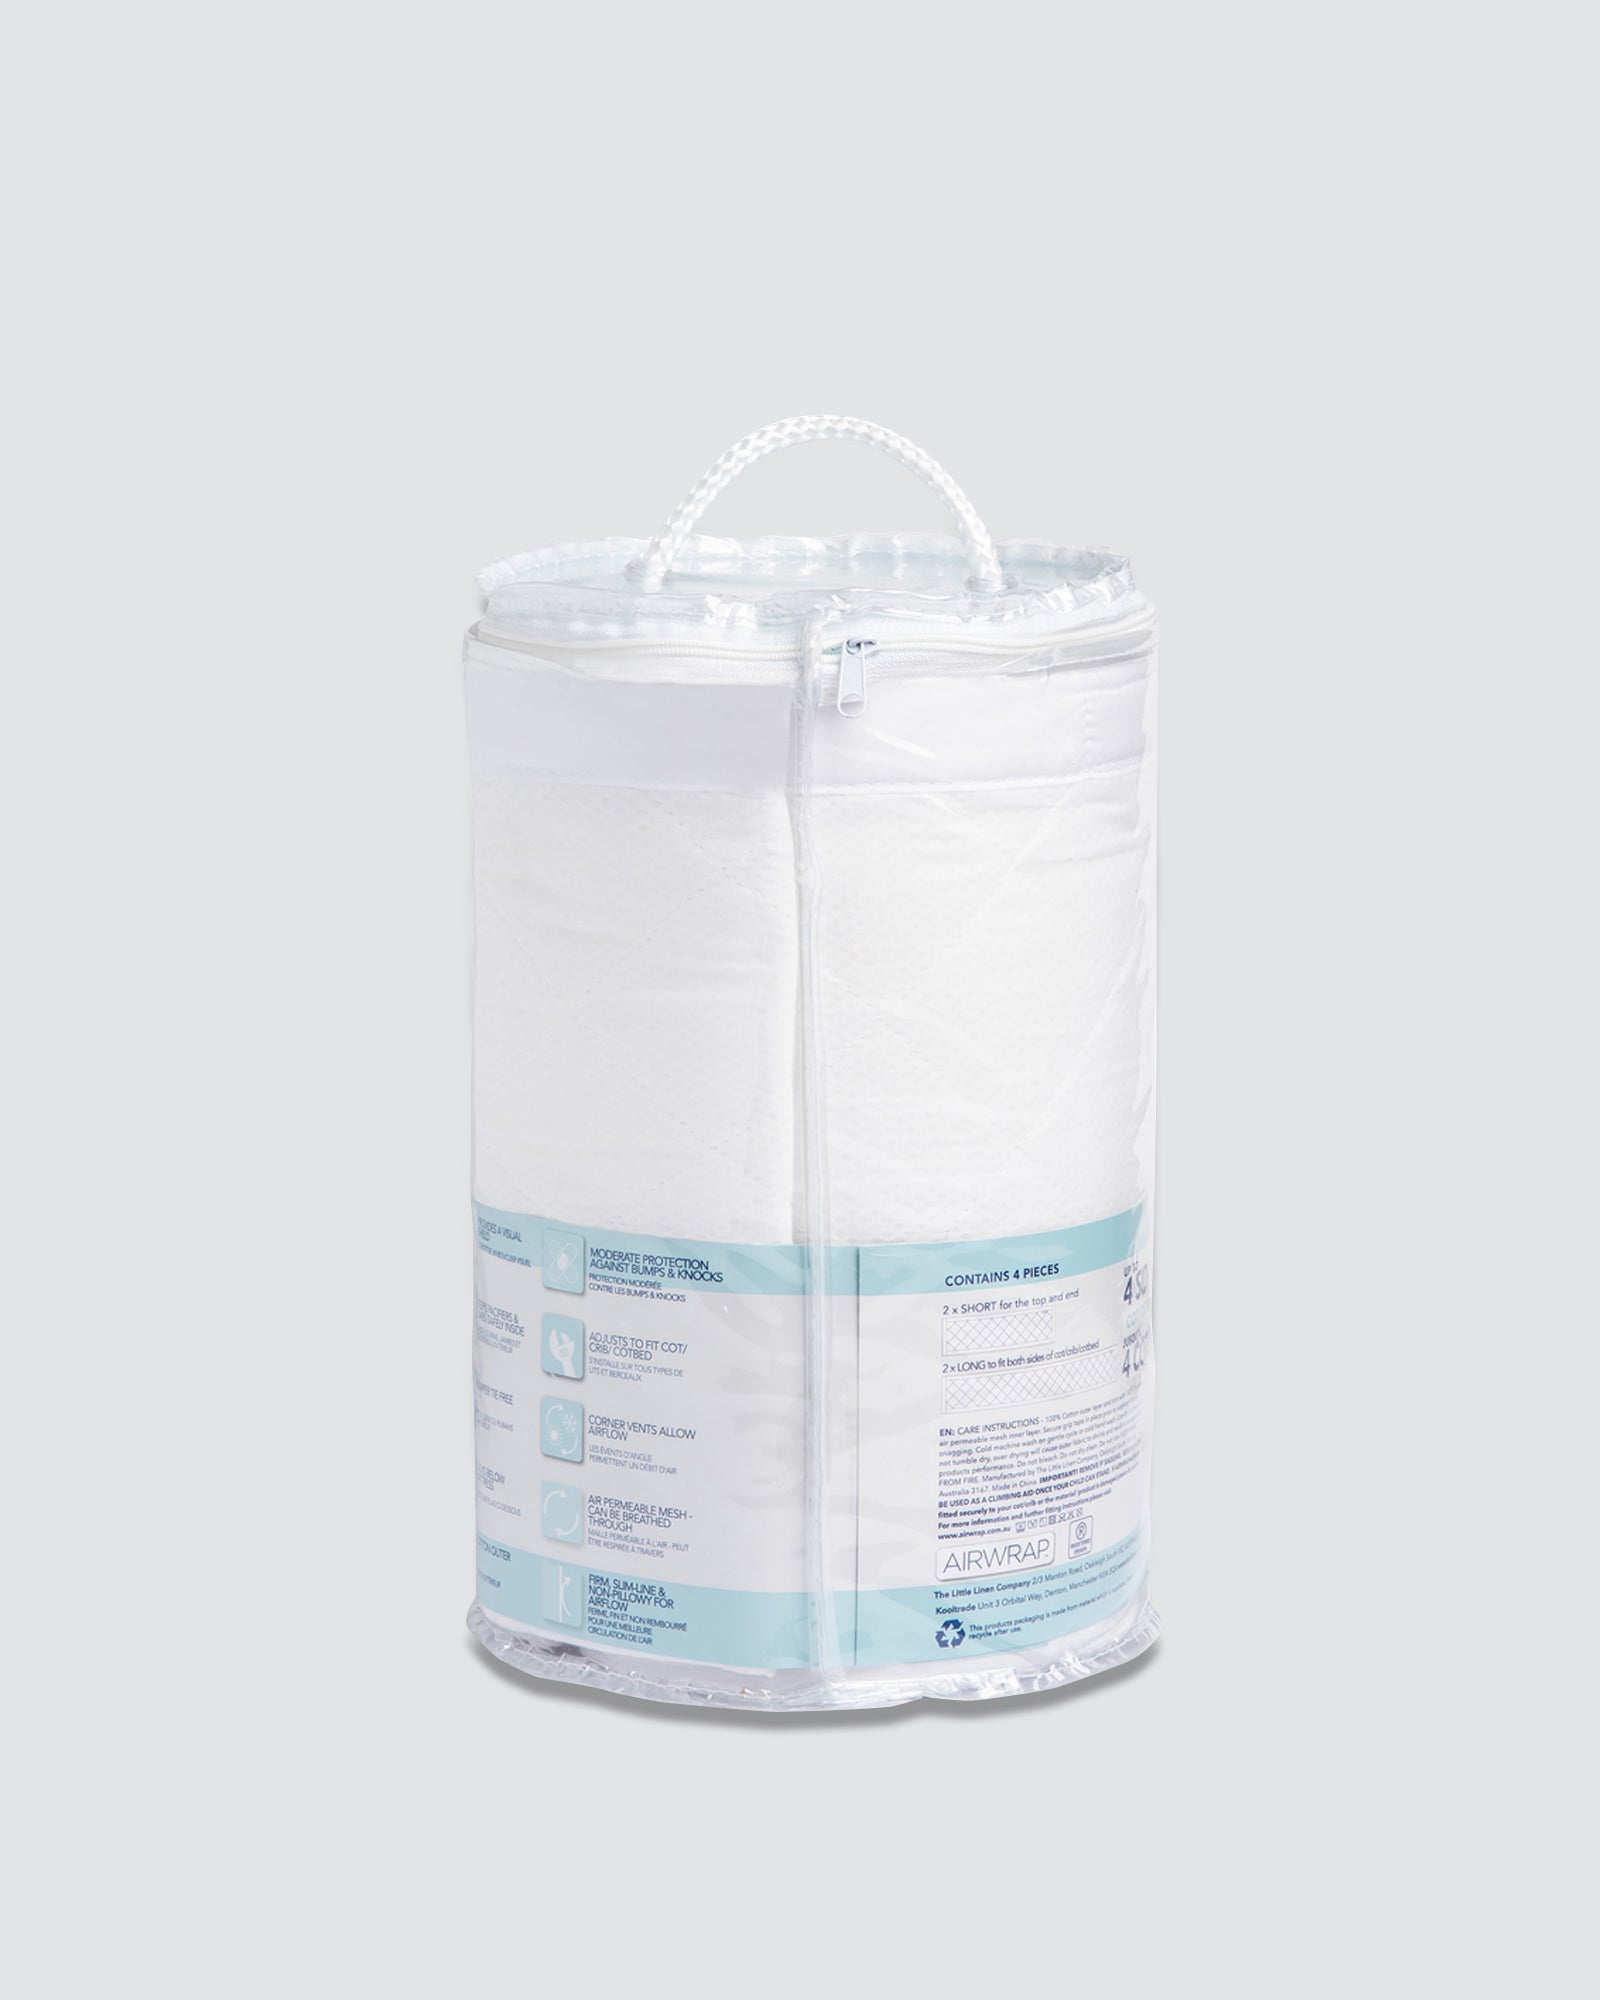 Airwrap Muslin Cot liner White back Packaging